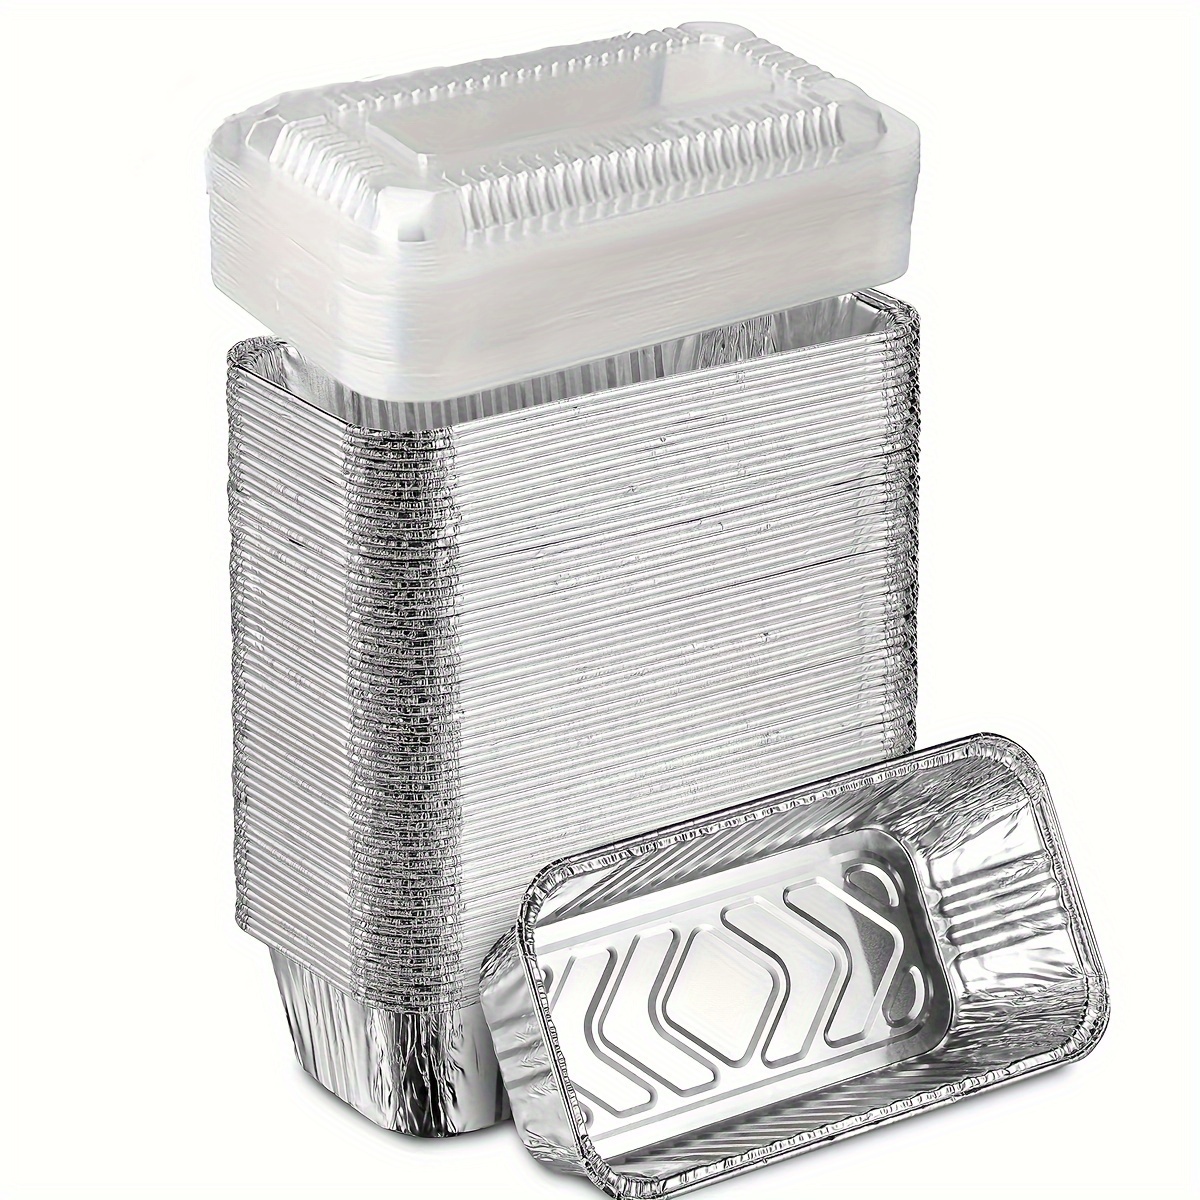 Mini Loaf Baking Pans Disposable Aluminum Foil 1lb Capacity Small